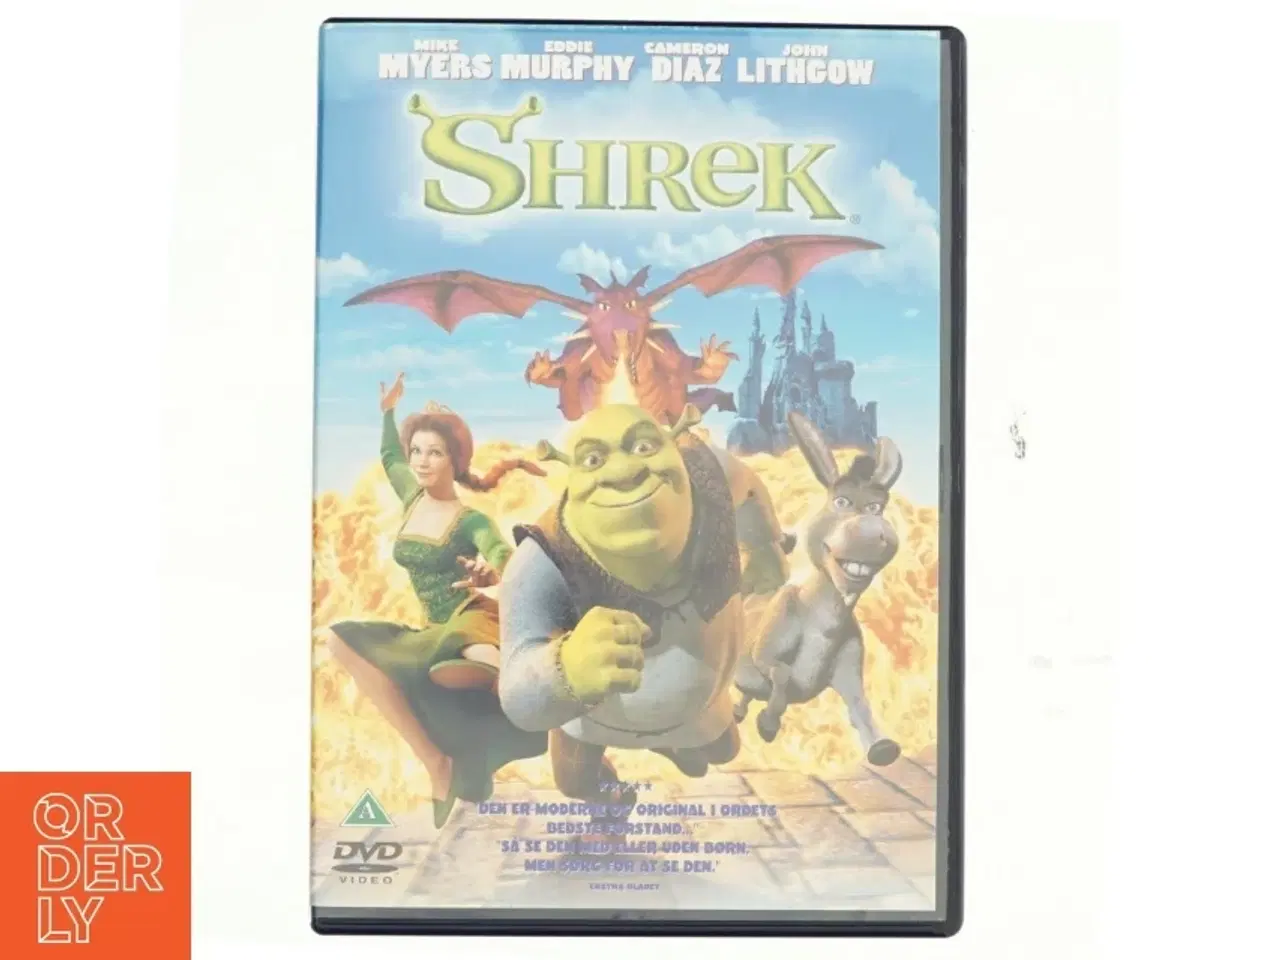 Billede 1 - De fire Shrek film